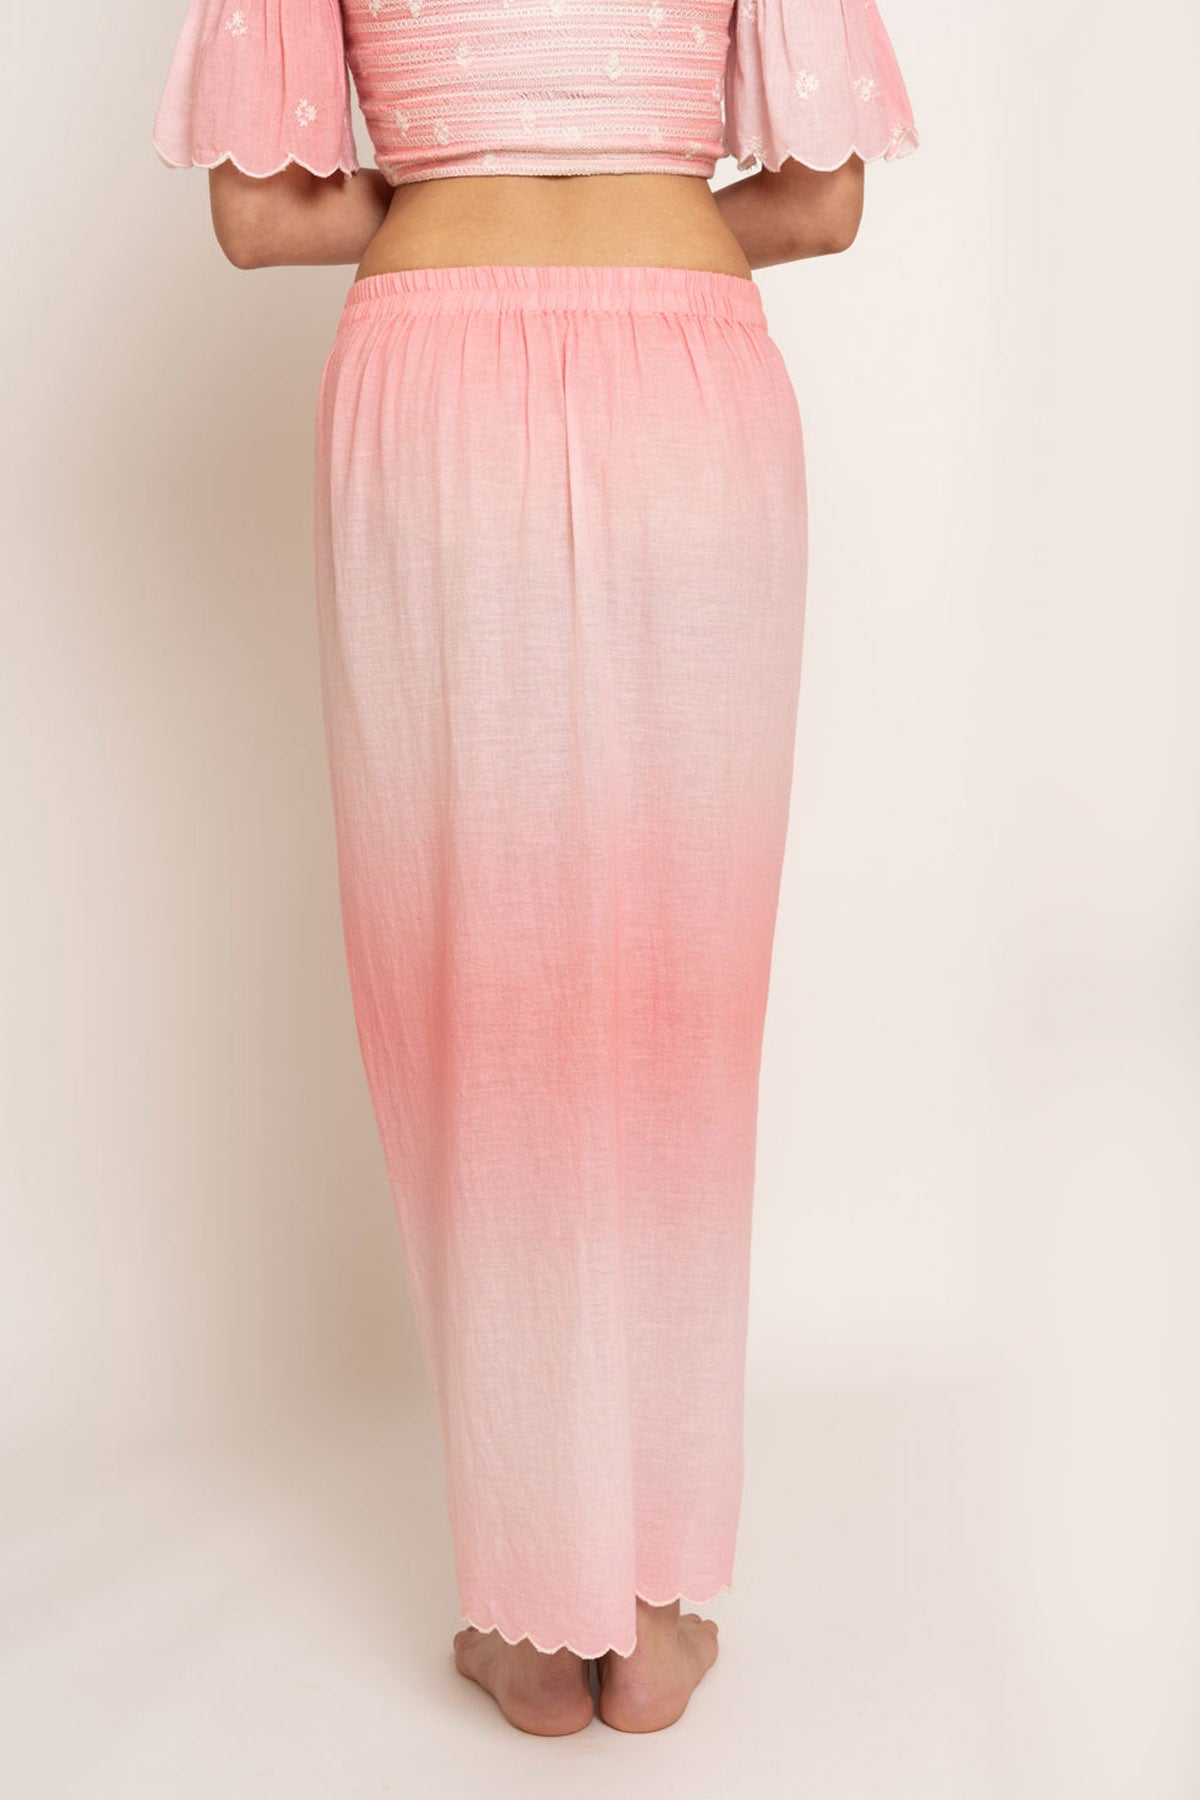 Pink Ombre Sarong Skirt